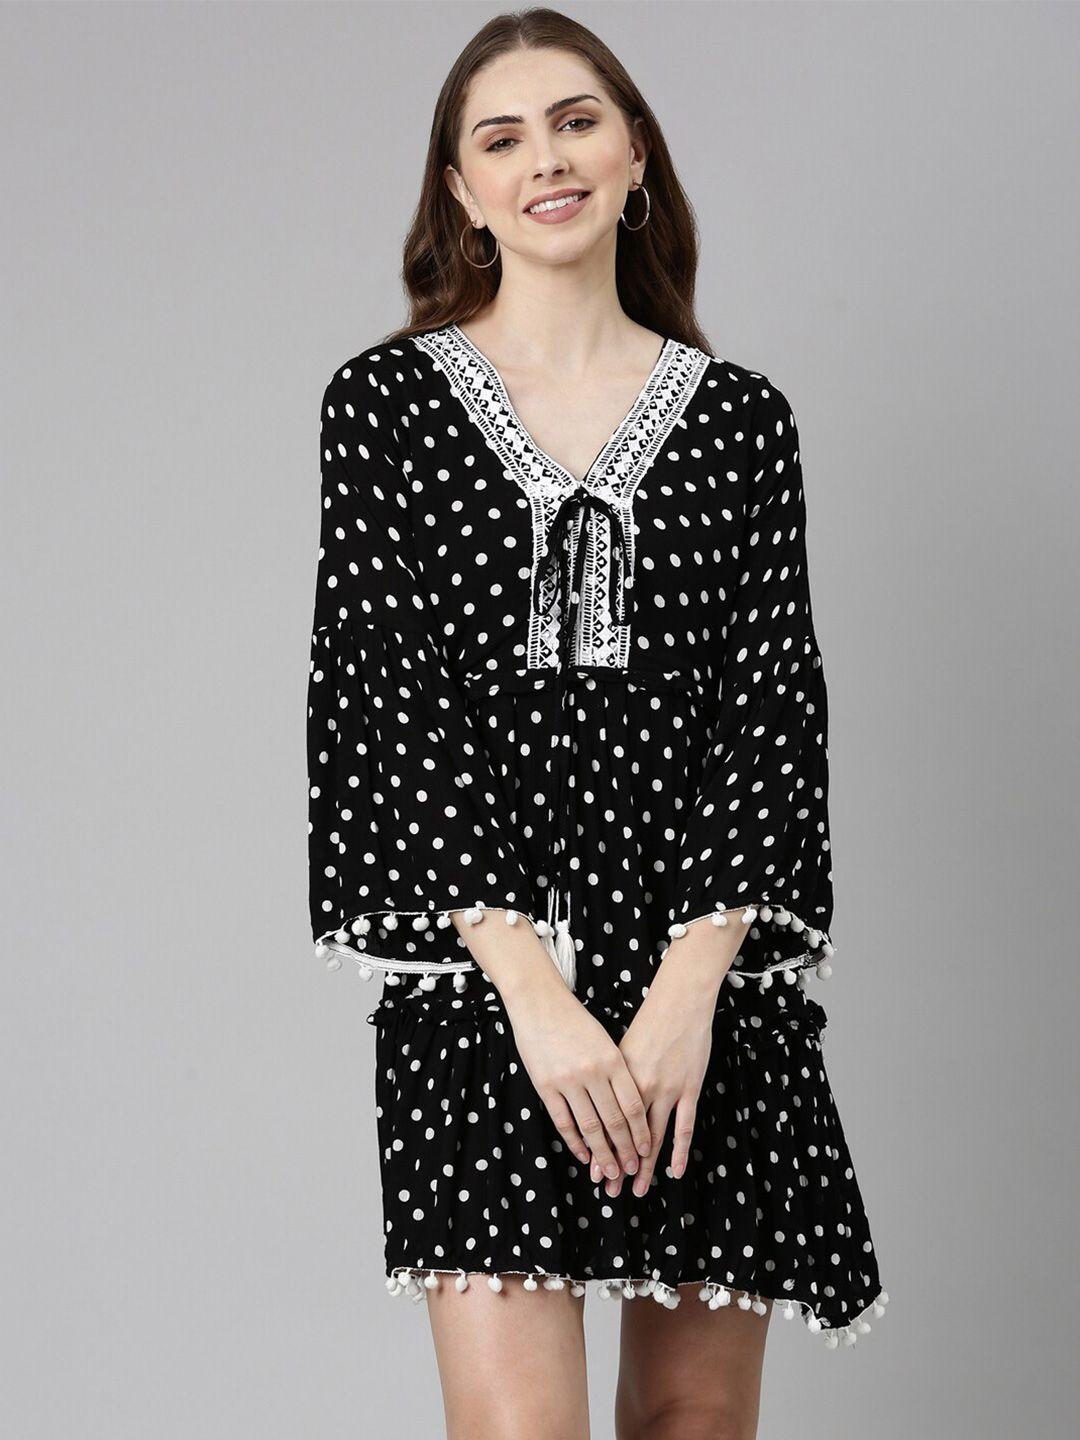 showoff cotton polka dots printed a-line dress